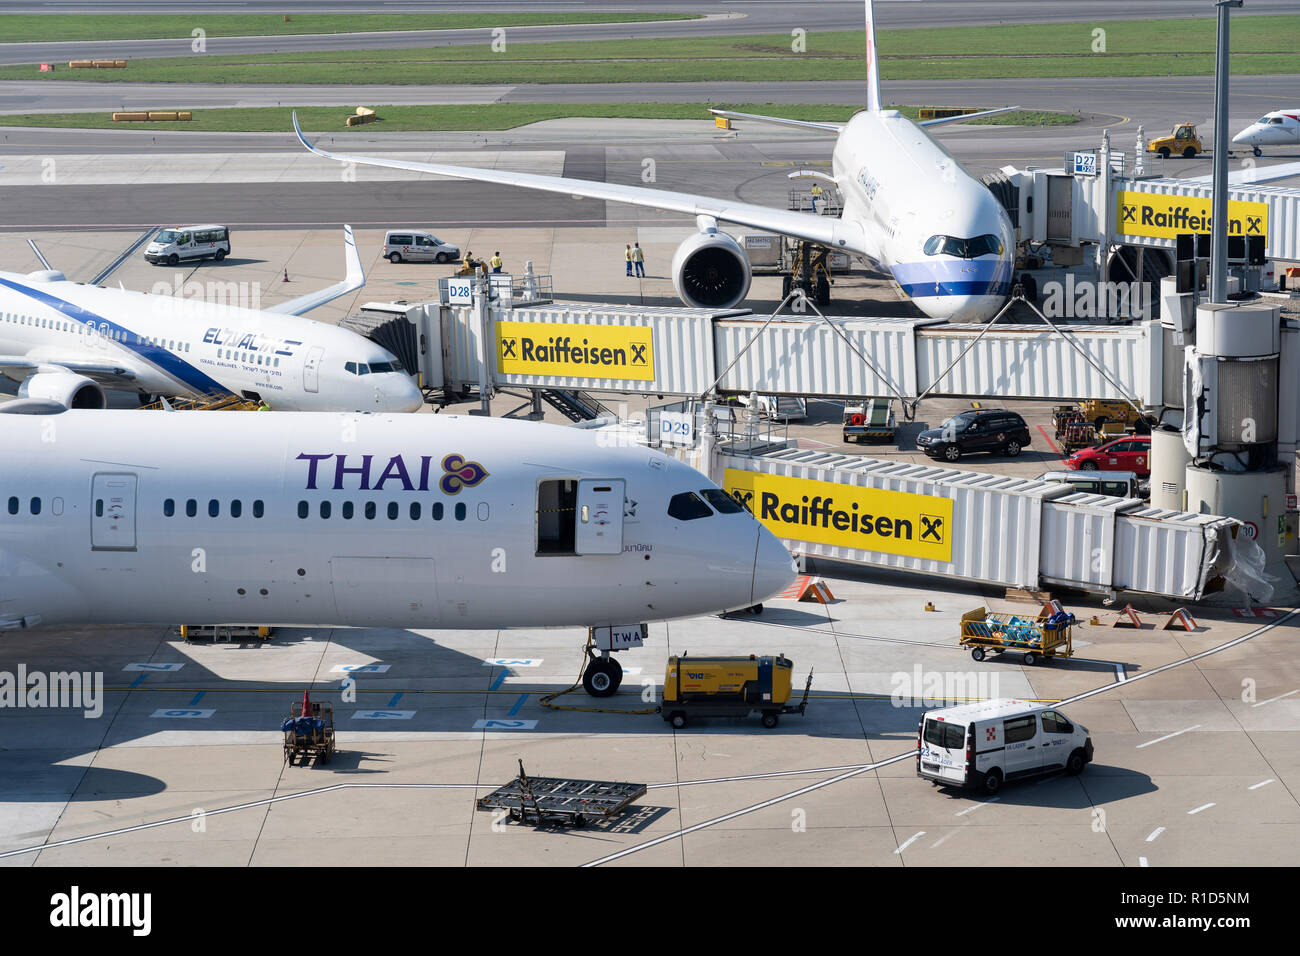 A Thai Airways passenger jet docked to a passenger bridge at Vienna Airport. Austria. Concept - European air travel Stock Photo